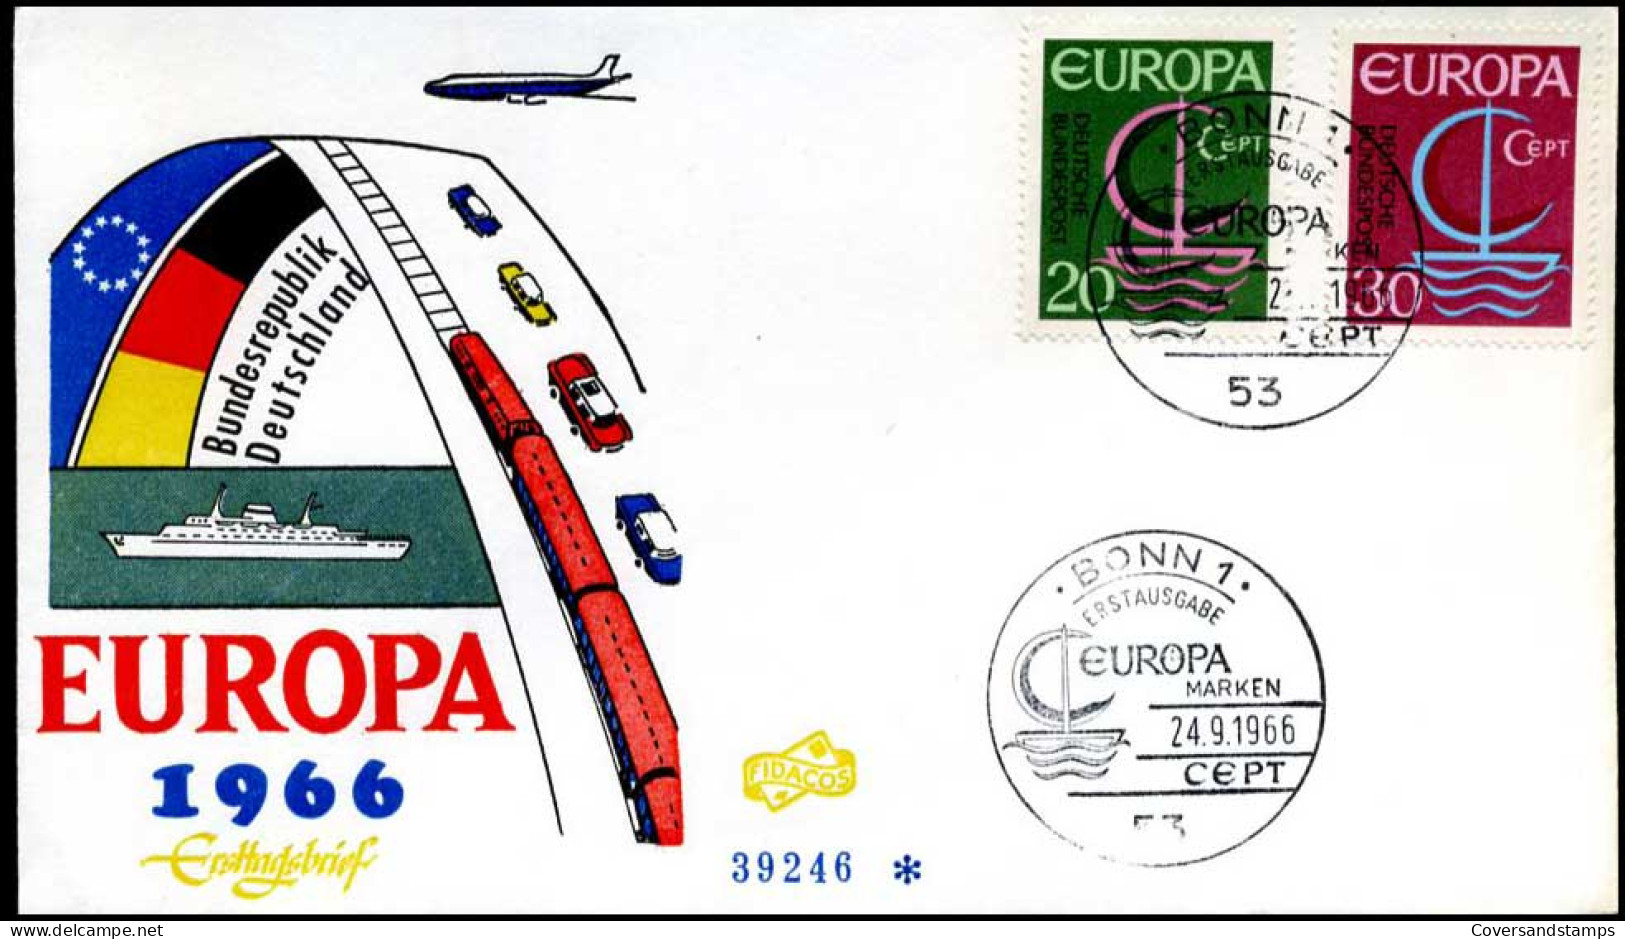  Bundespost - FDC - Europa CEPT 1964 - 1964